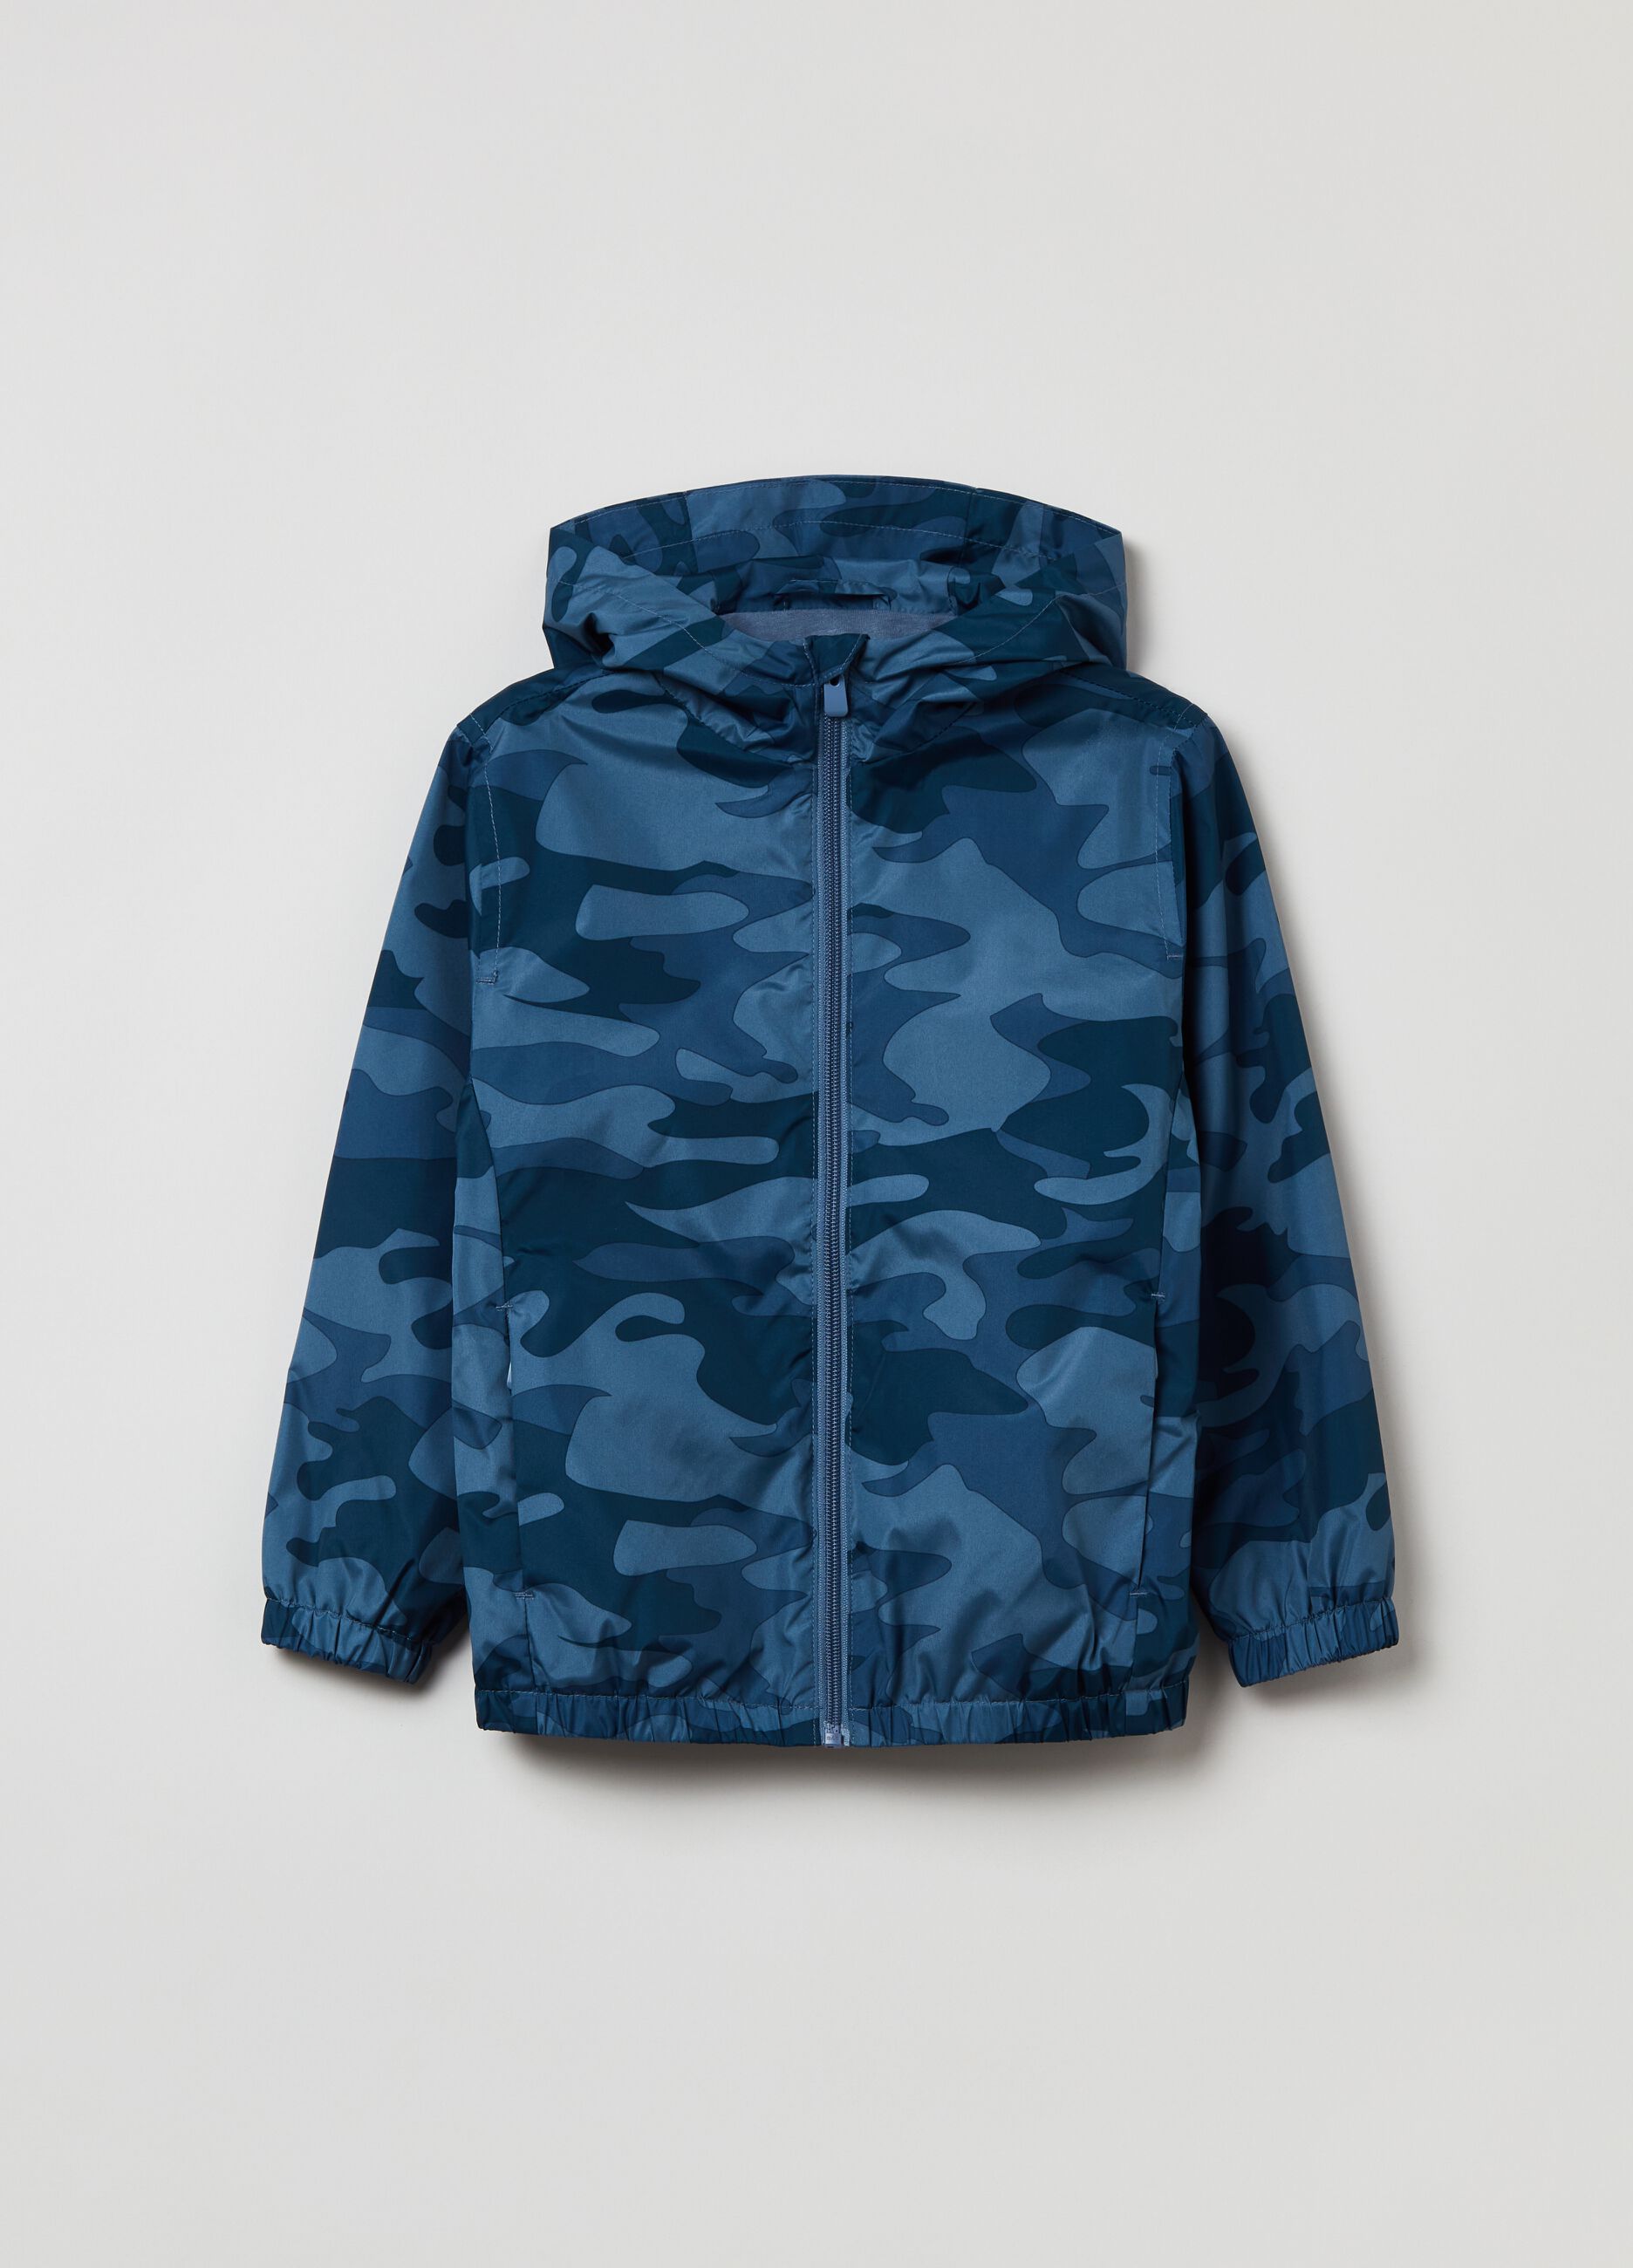 Camouflage waterproof jacket